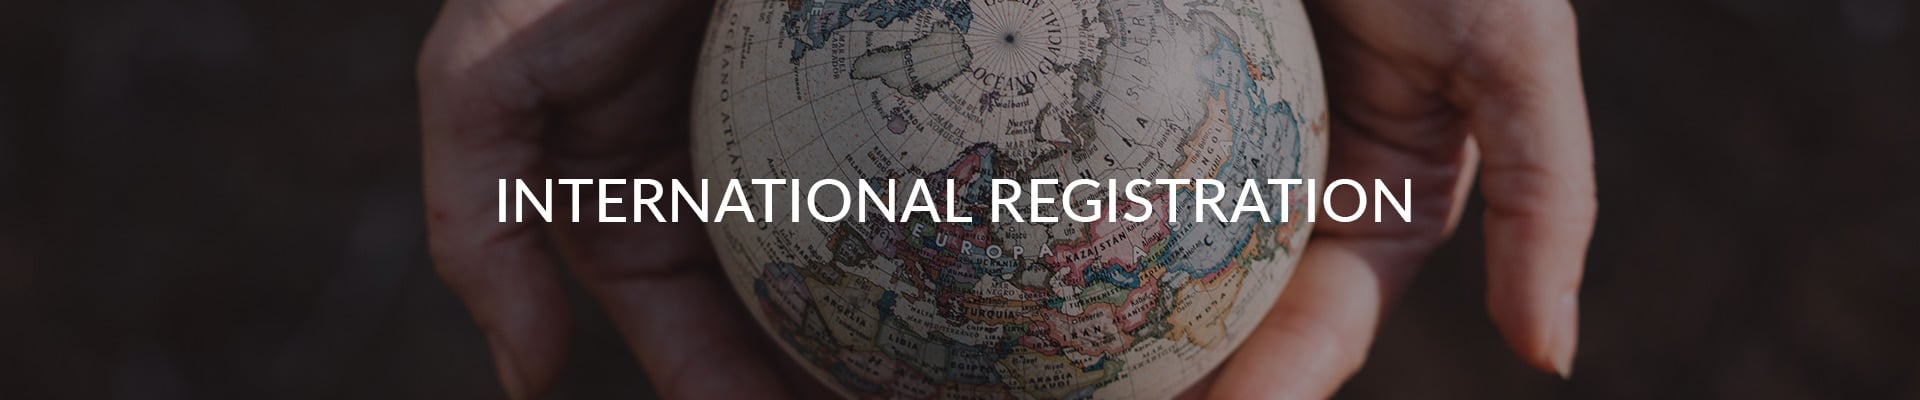 International Registration Robinson Pharma, Inc.